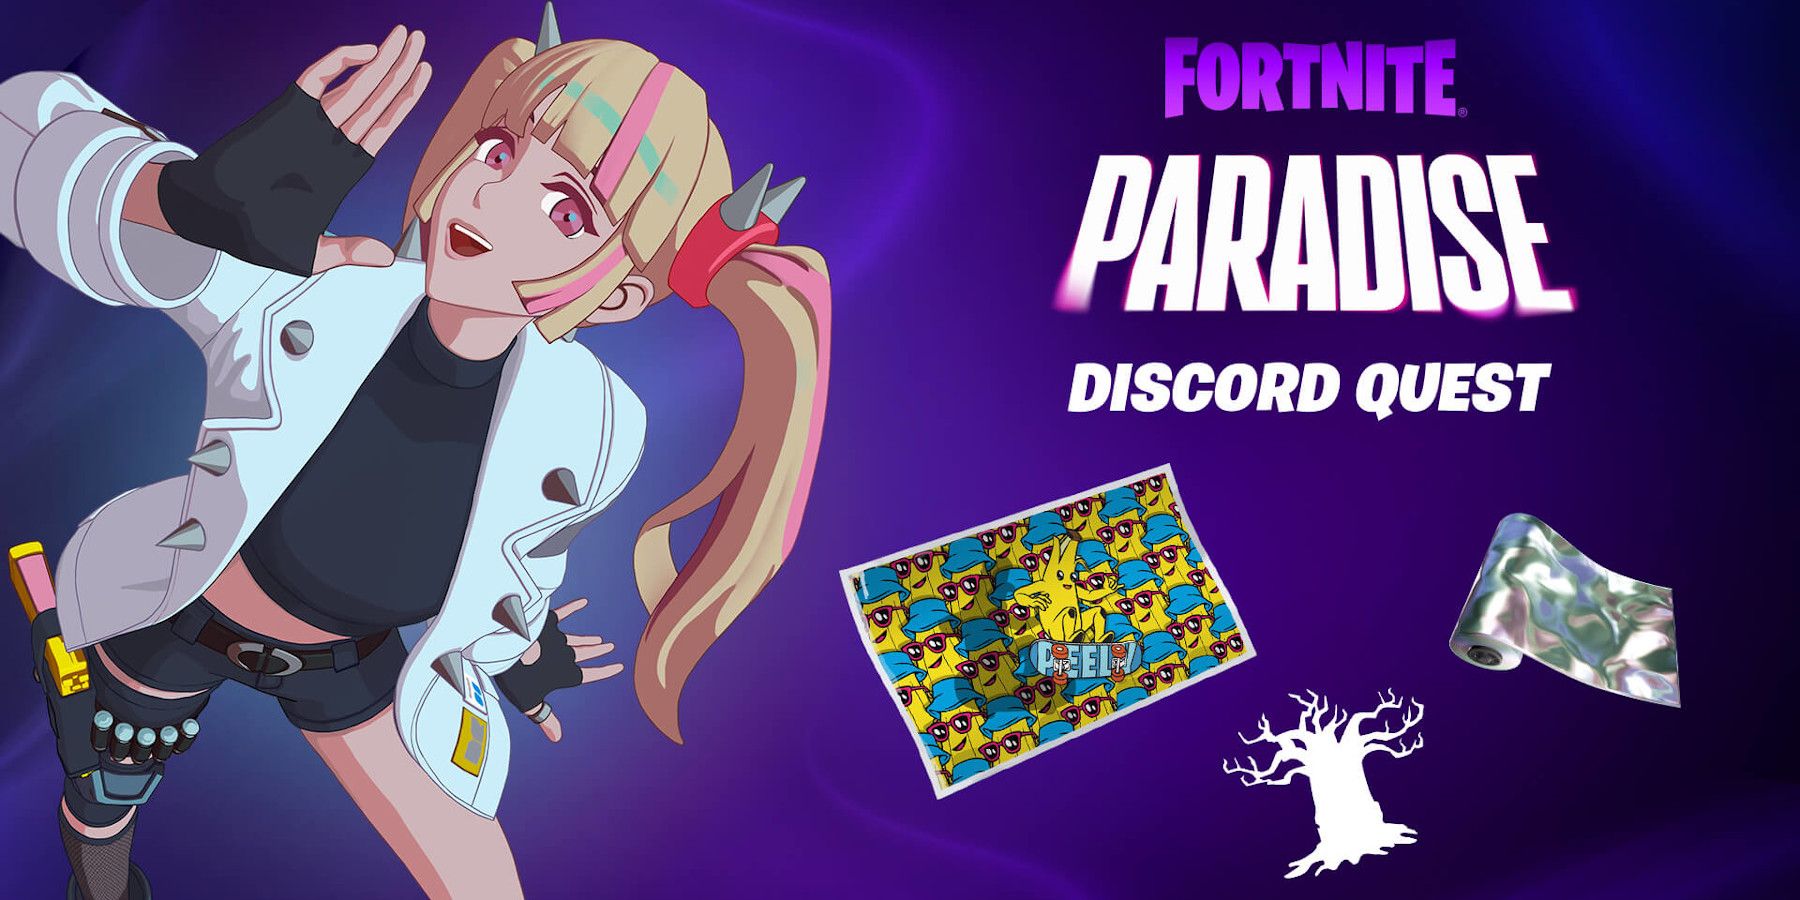 fortnite paradise discord quests tasks rewards